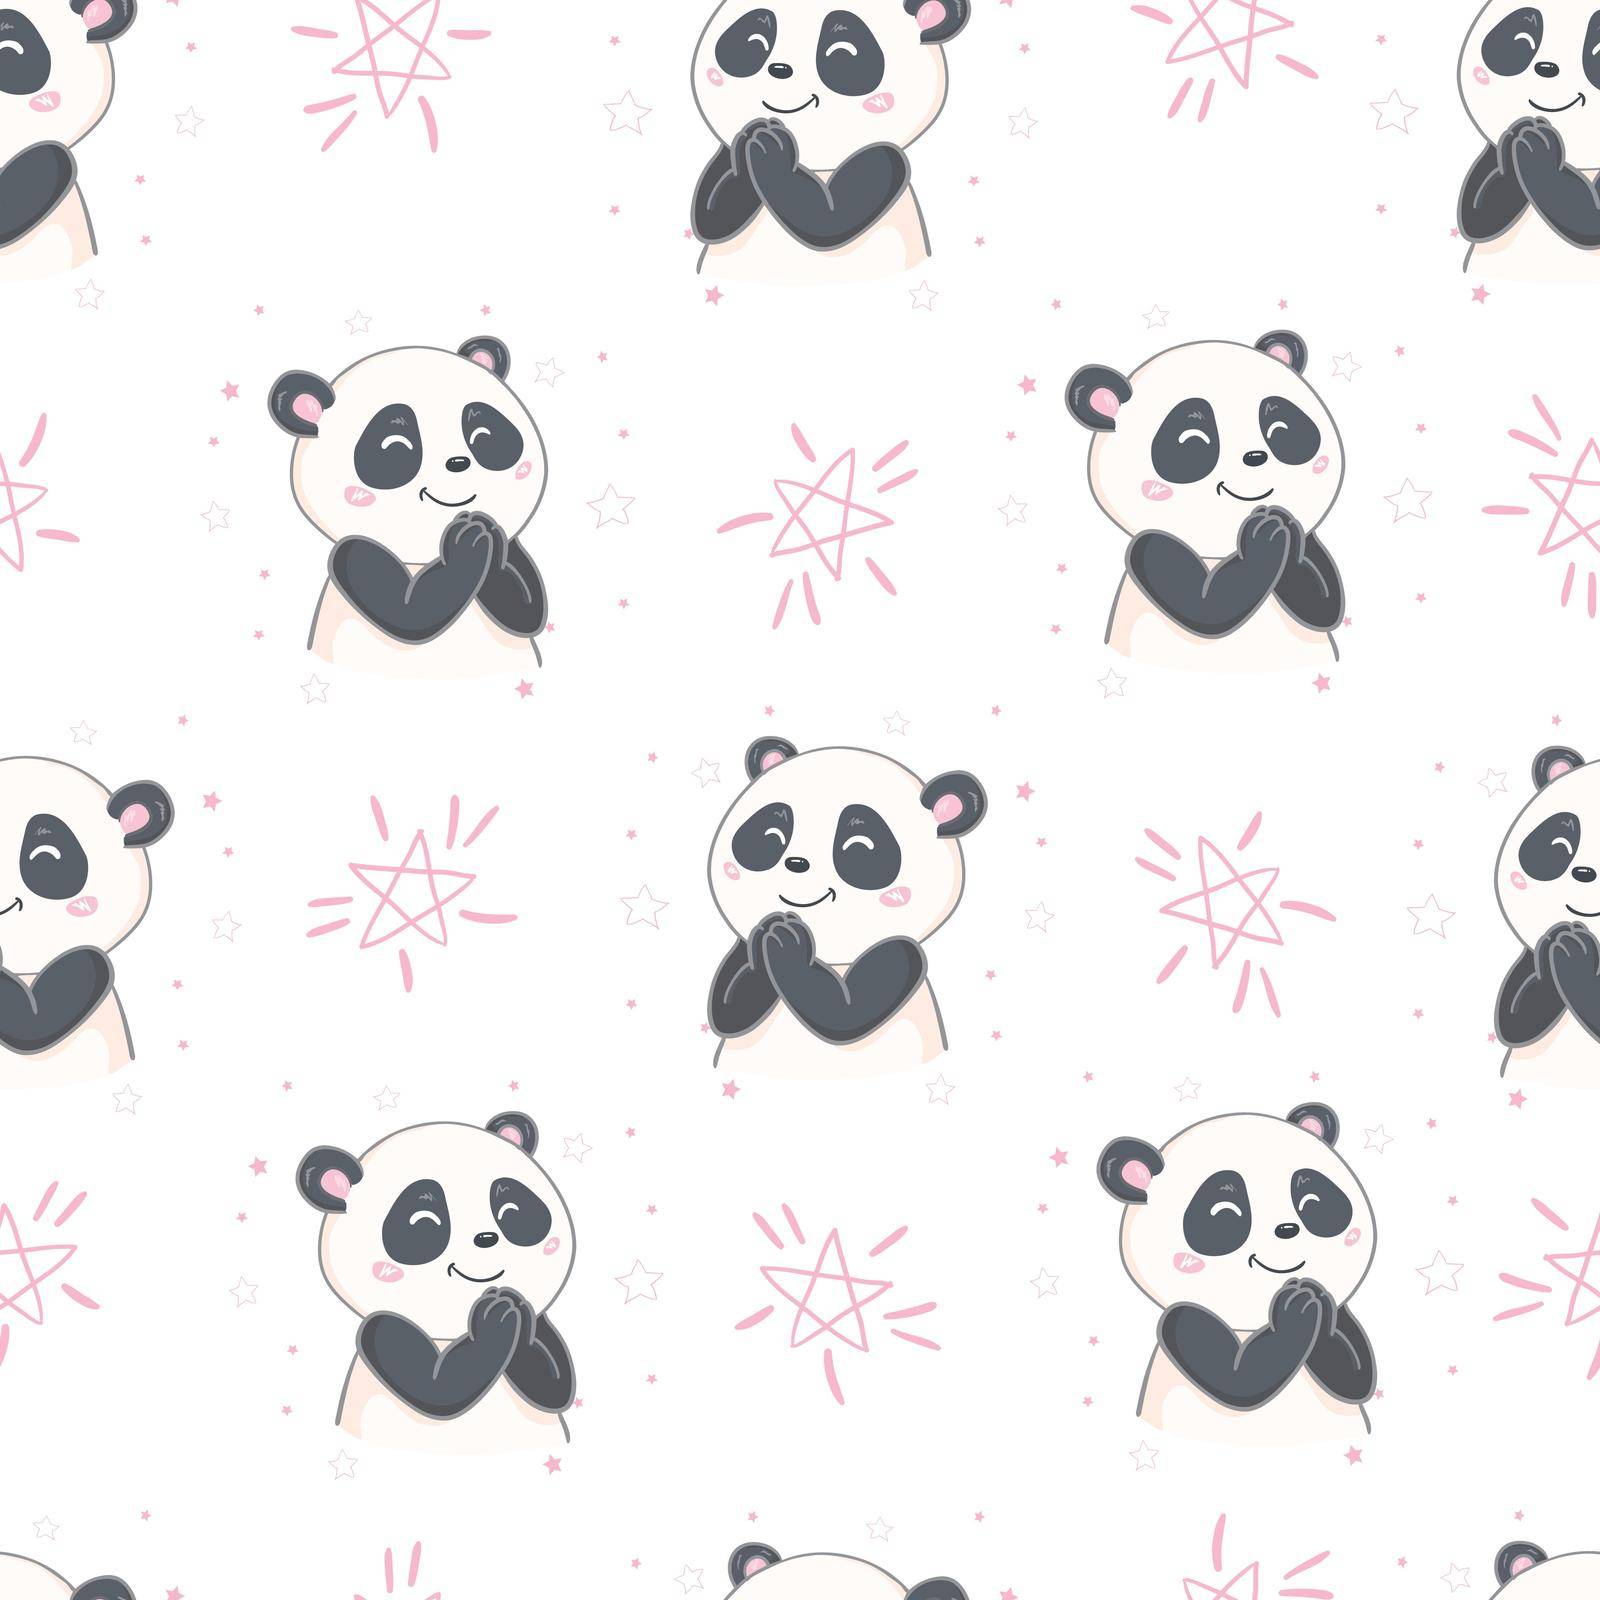 Seamless pattern with cute hand drawn panda' heads. by Vladimir90